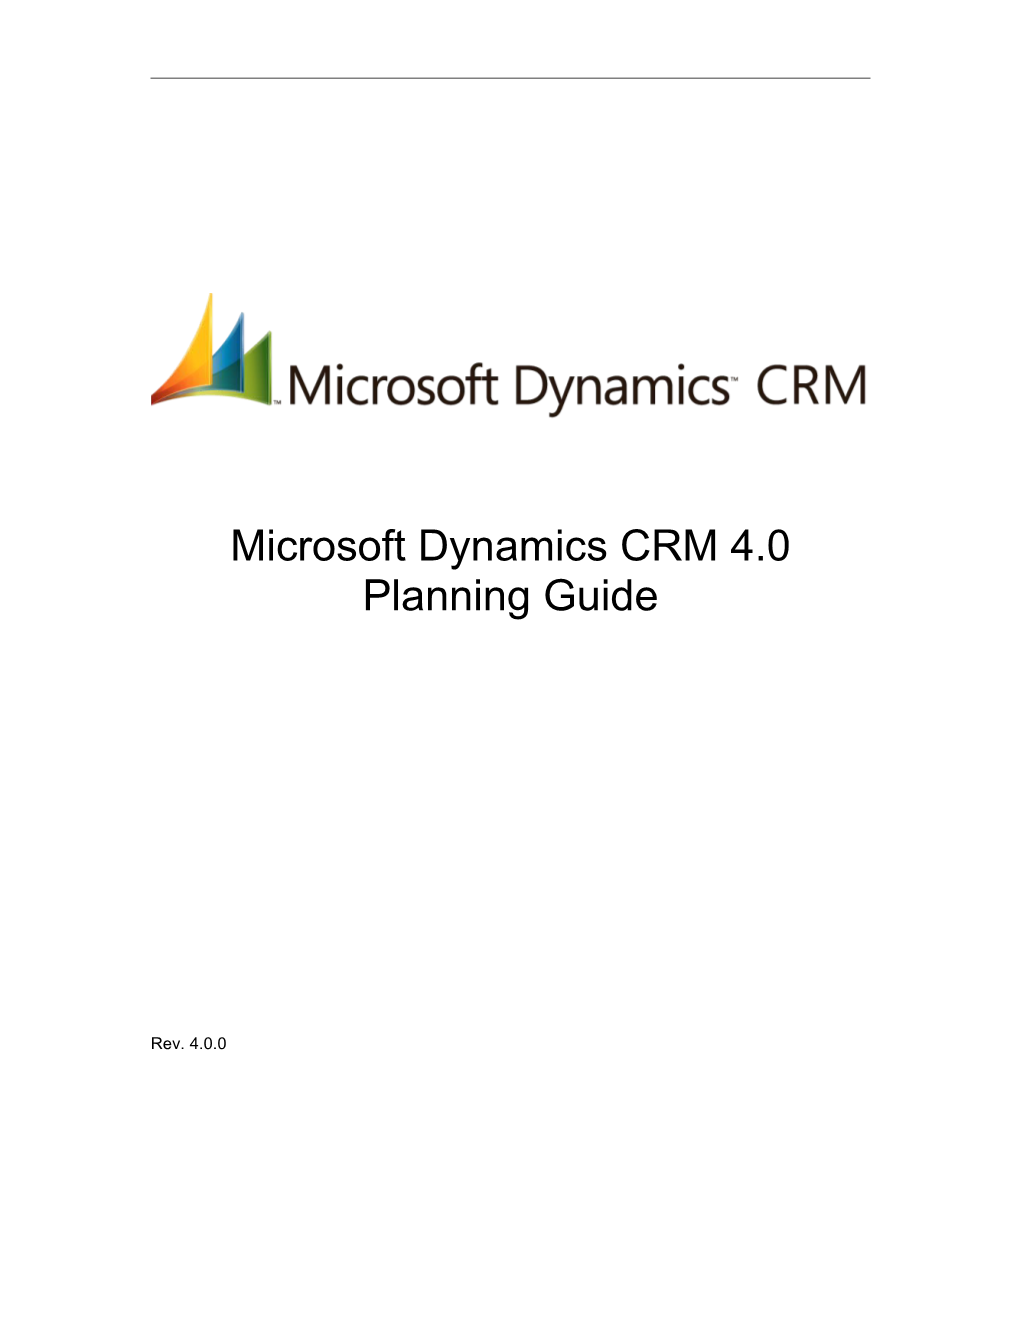 Microsoft Dynamics CRM 4.0 Planning Guide